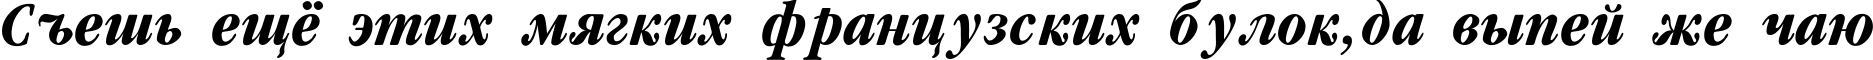 Пример написания шрифтом Garamondcond-Bold-Italic текста на русском